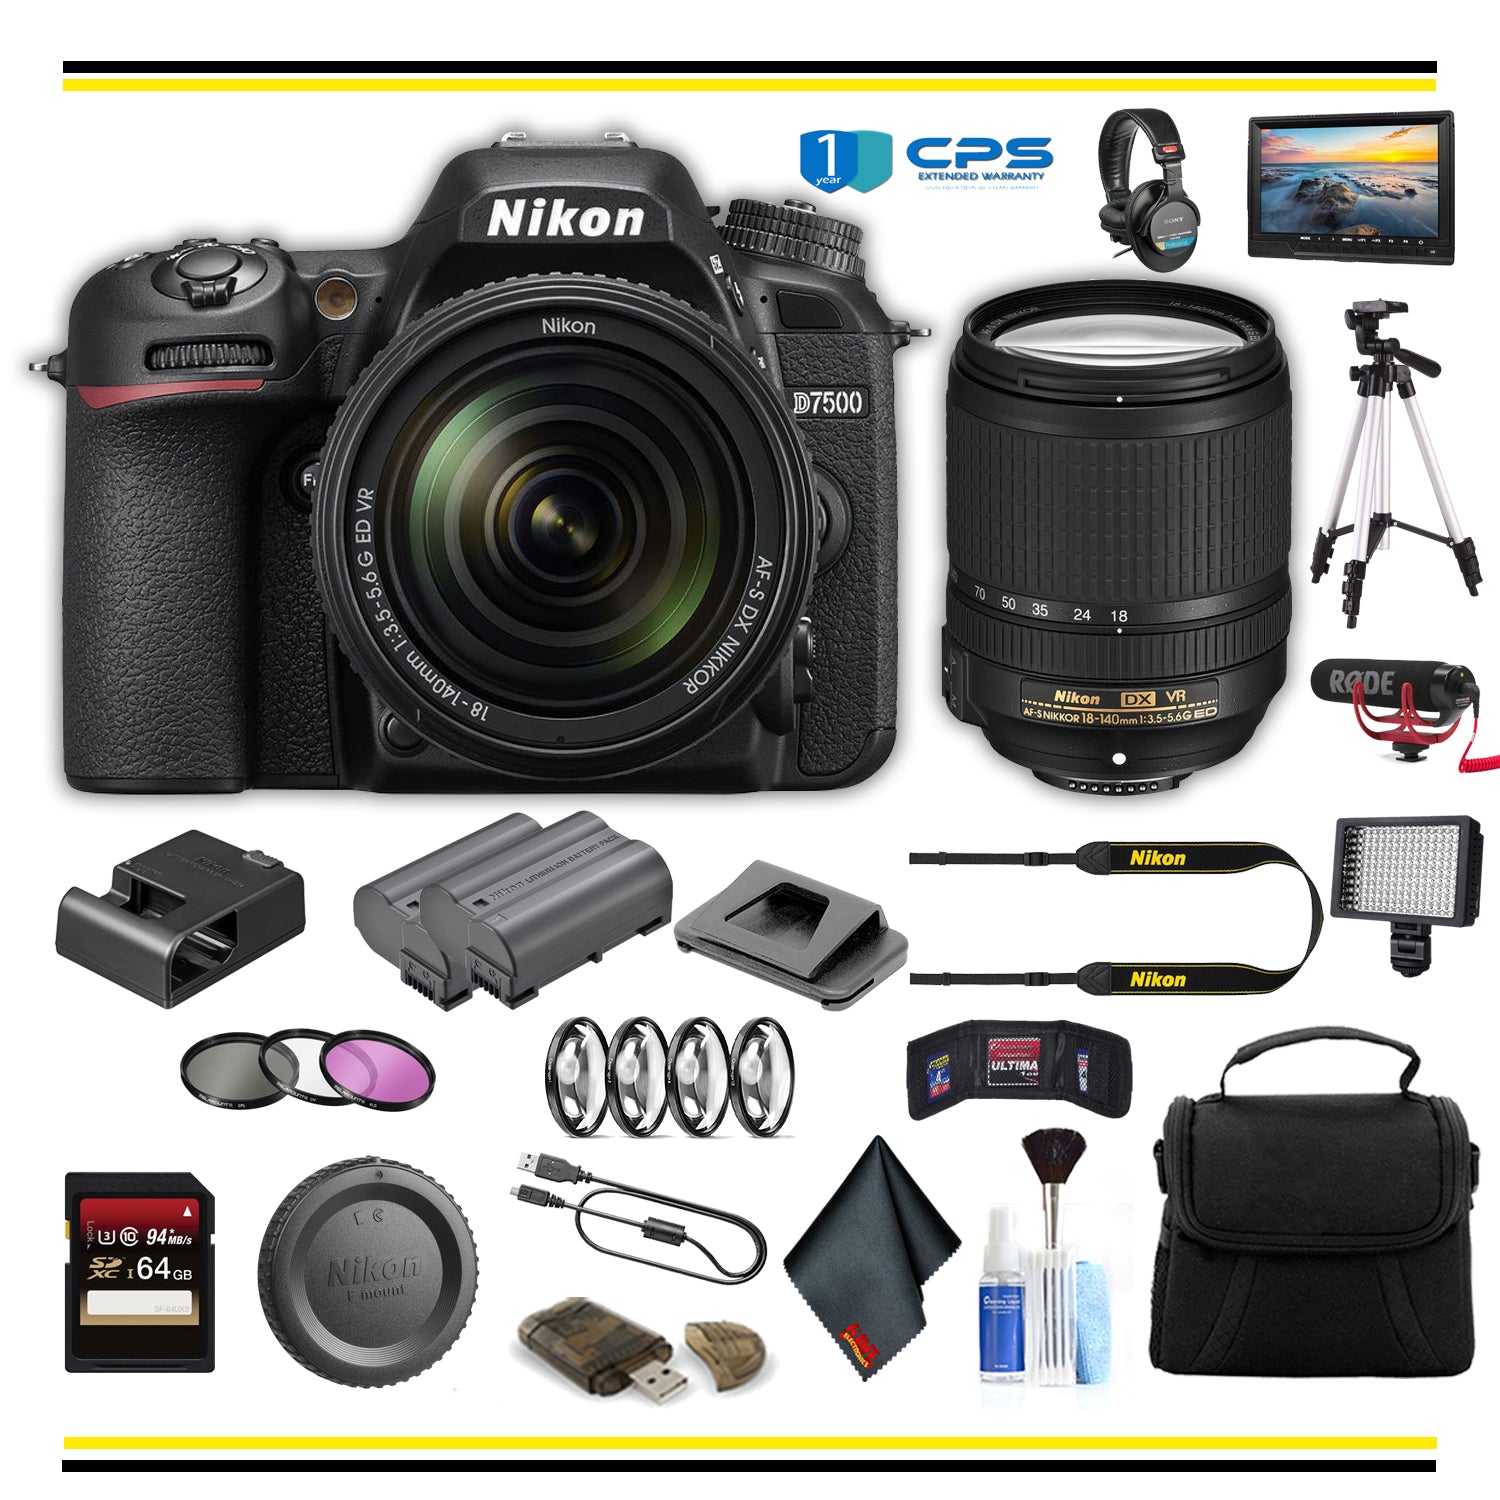 Nikon D D7500 20.9MP Digital SLR Camera - Black (Kit w/ 18-140mm VR Lens) Pro Bundle